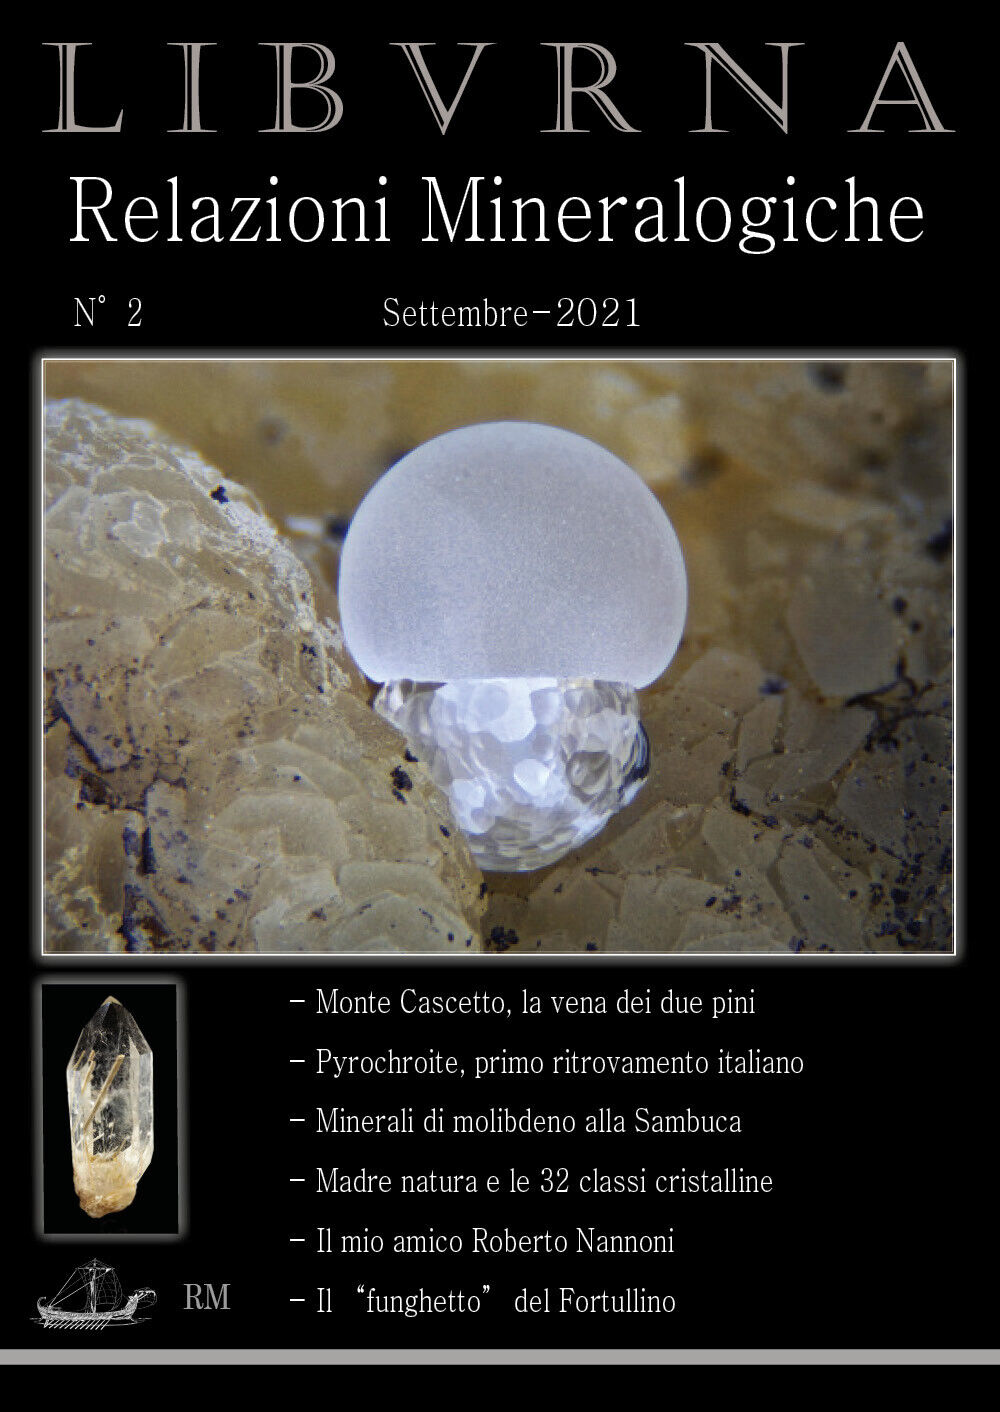 LIBVRNA N?2, minerali Toscana, settembre 2021. Mineralogia Toscana di Marco Boni